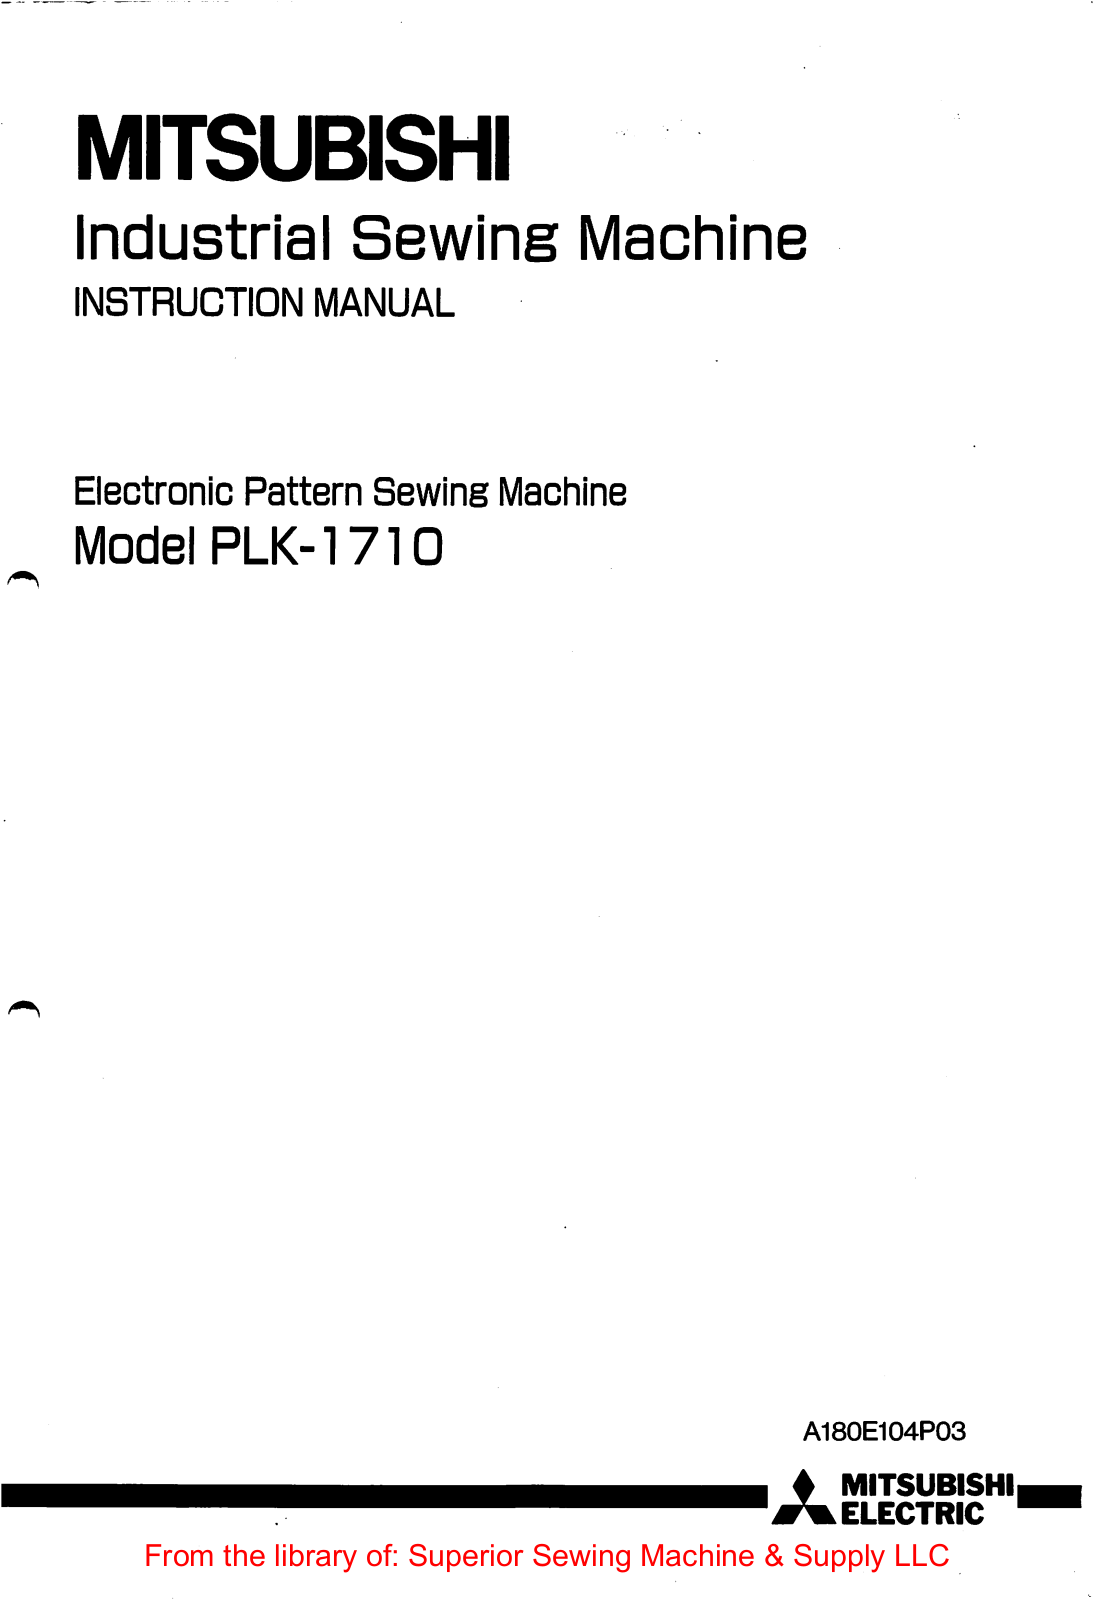 Mitsubishi PLK-1710 Instruction Manual